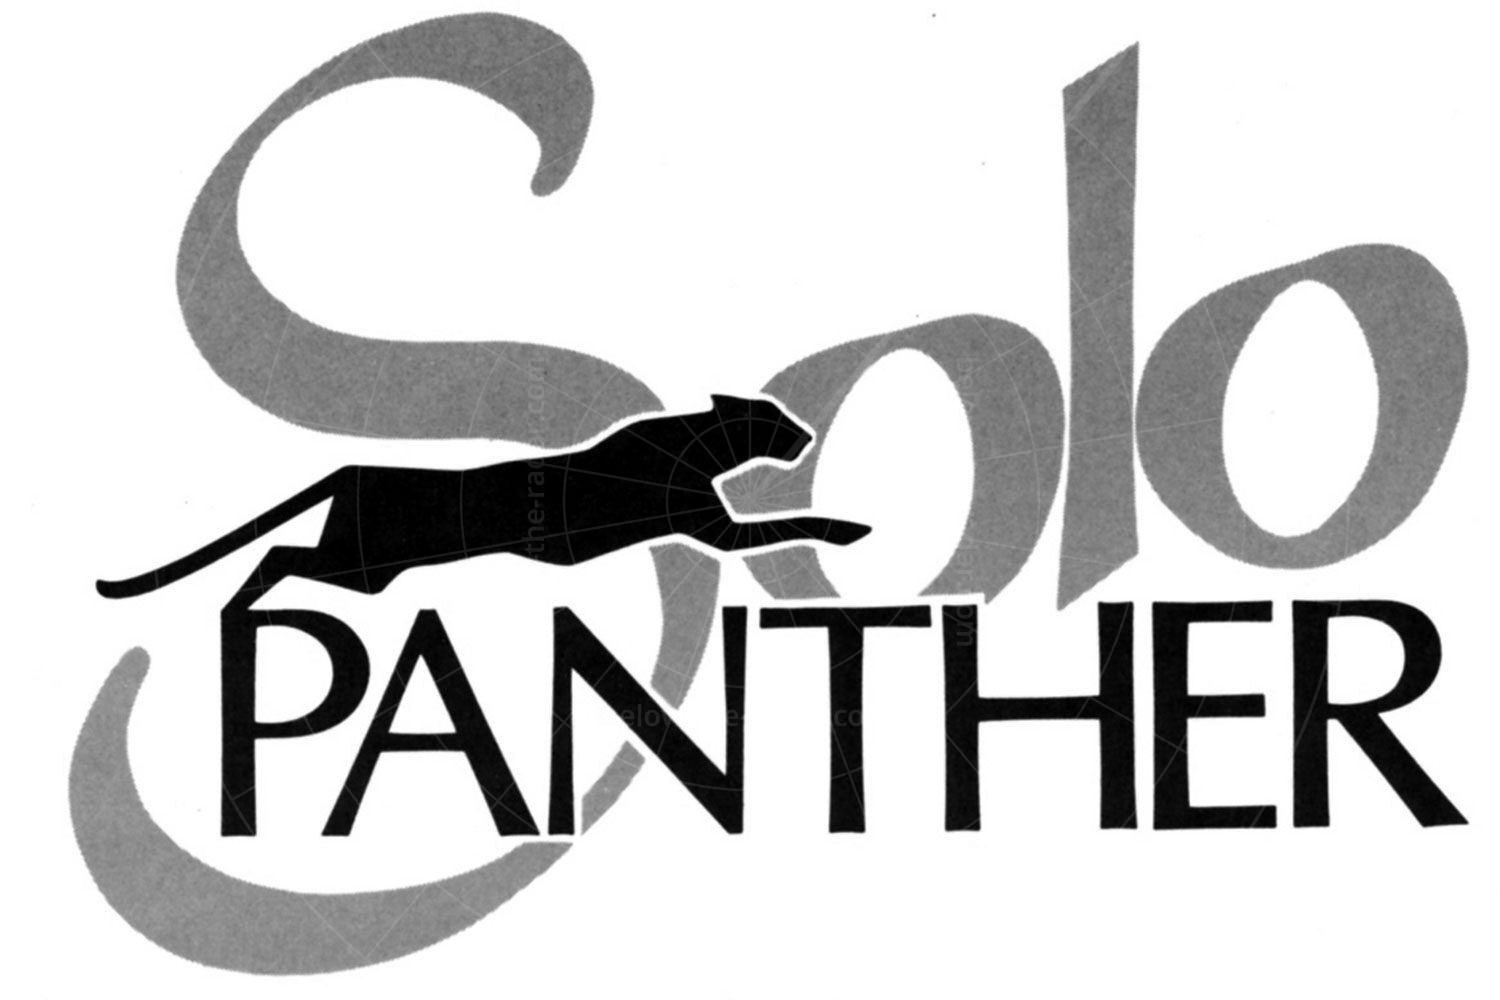 Panther Solo 2 logo Pic: magiccarpics.co.uk | Panther Solo 2 logo